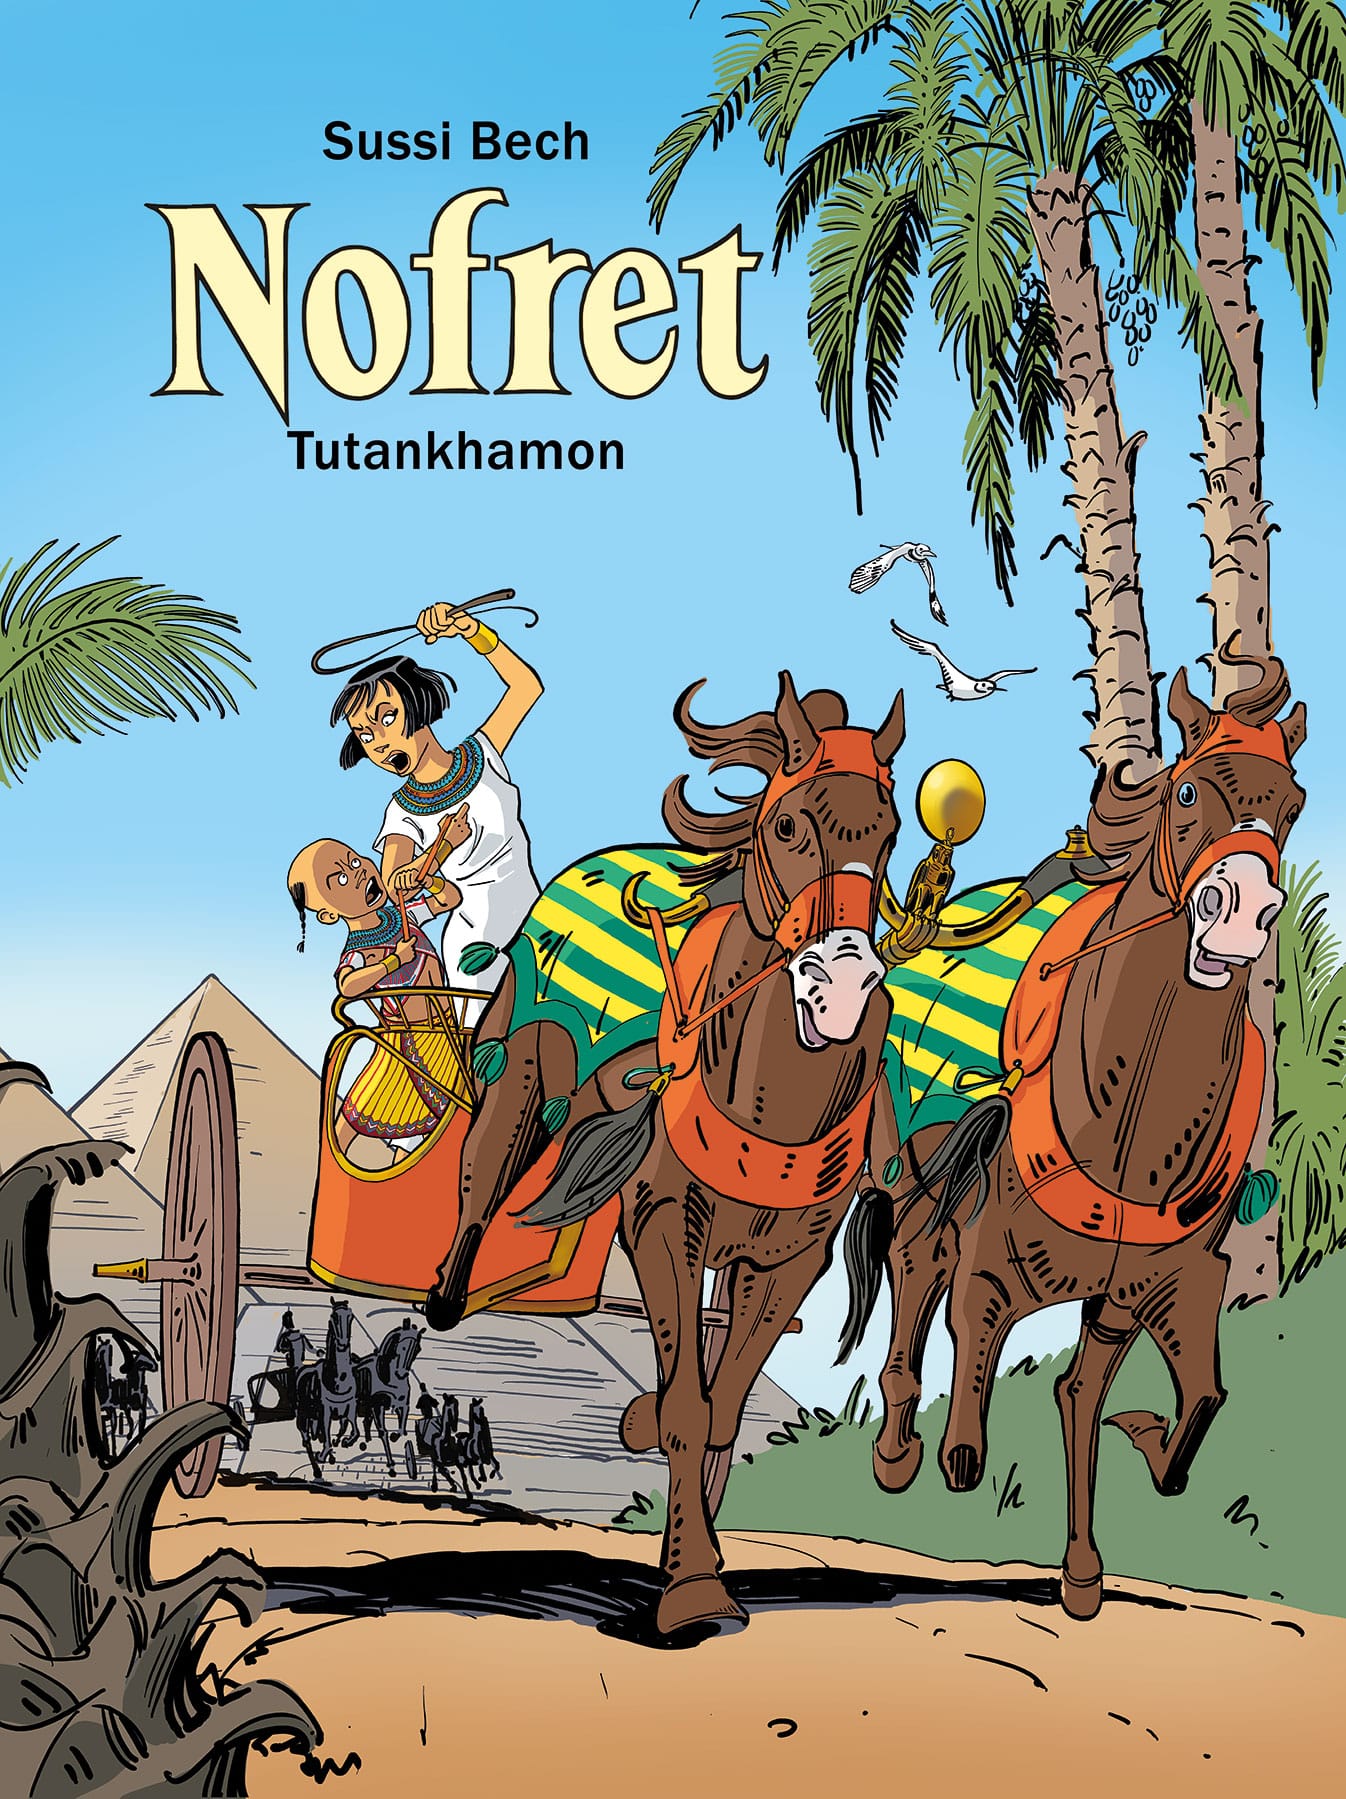 Nofret Nefriti by Sussi Bech - mainstream comics